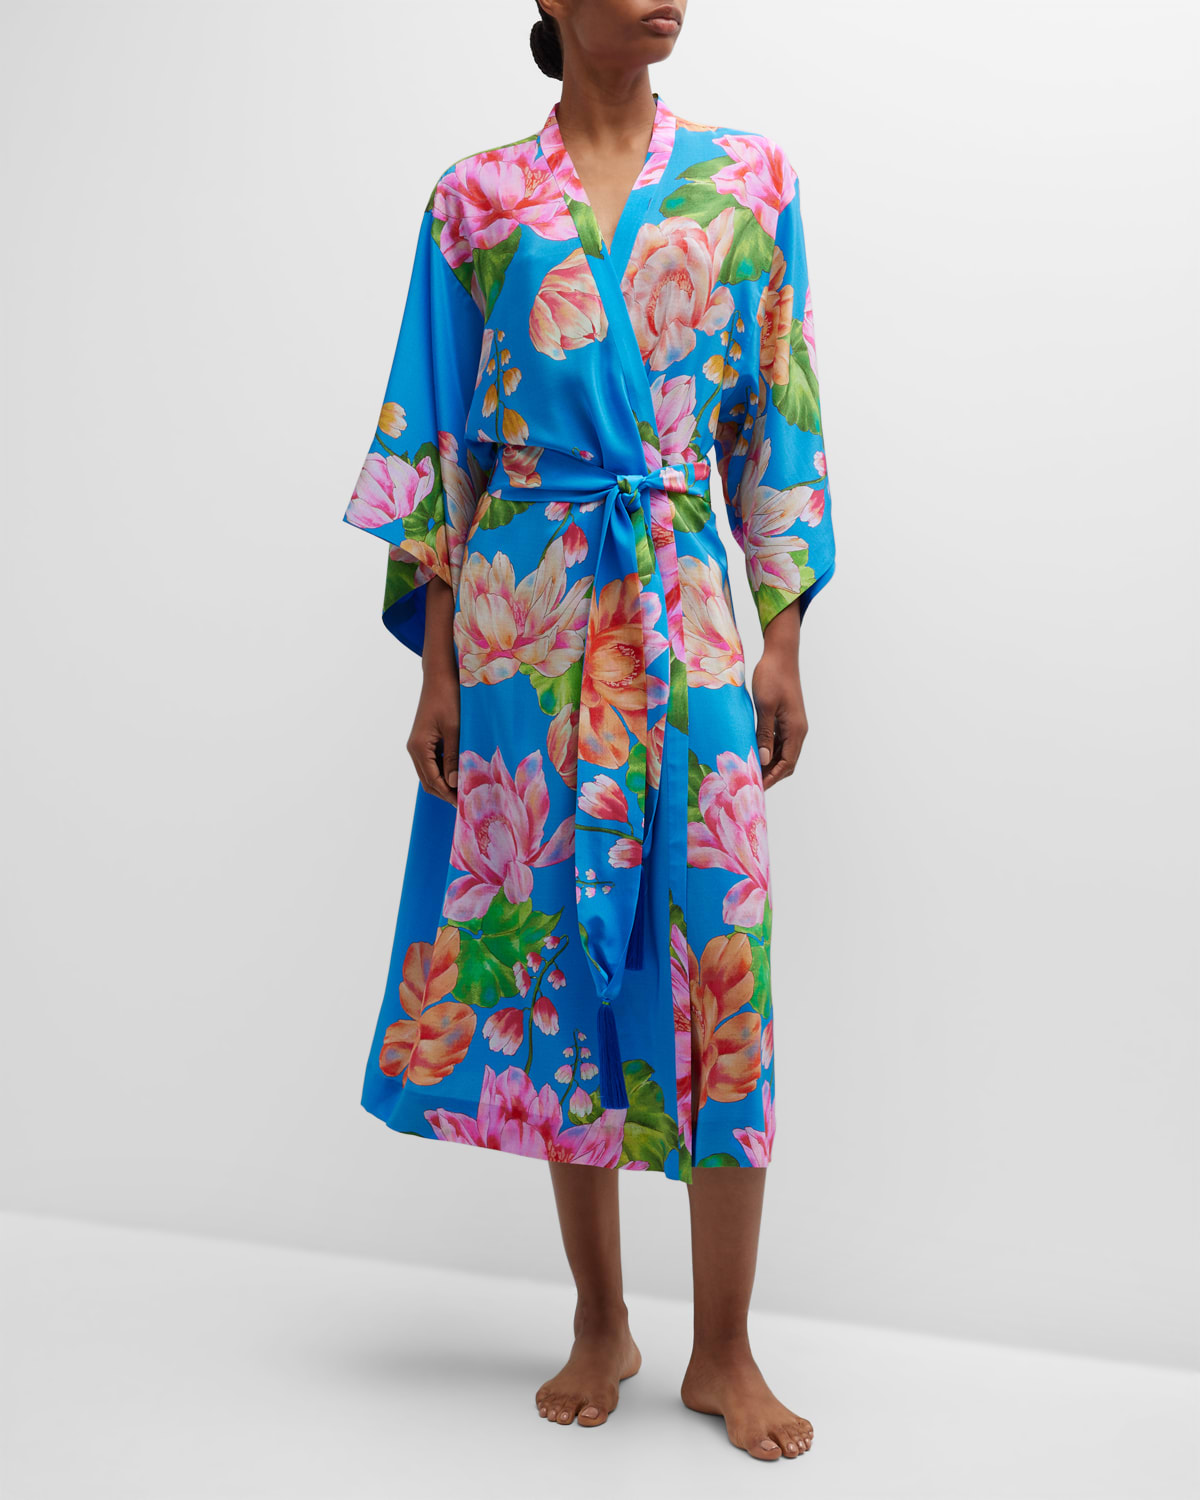 Josie Natori Hanabi Floral-Print Kimono-Sleeve Silk Robe